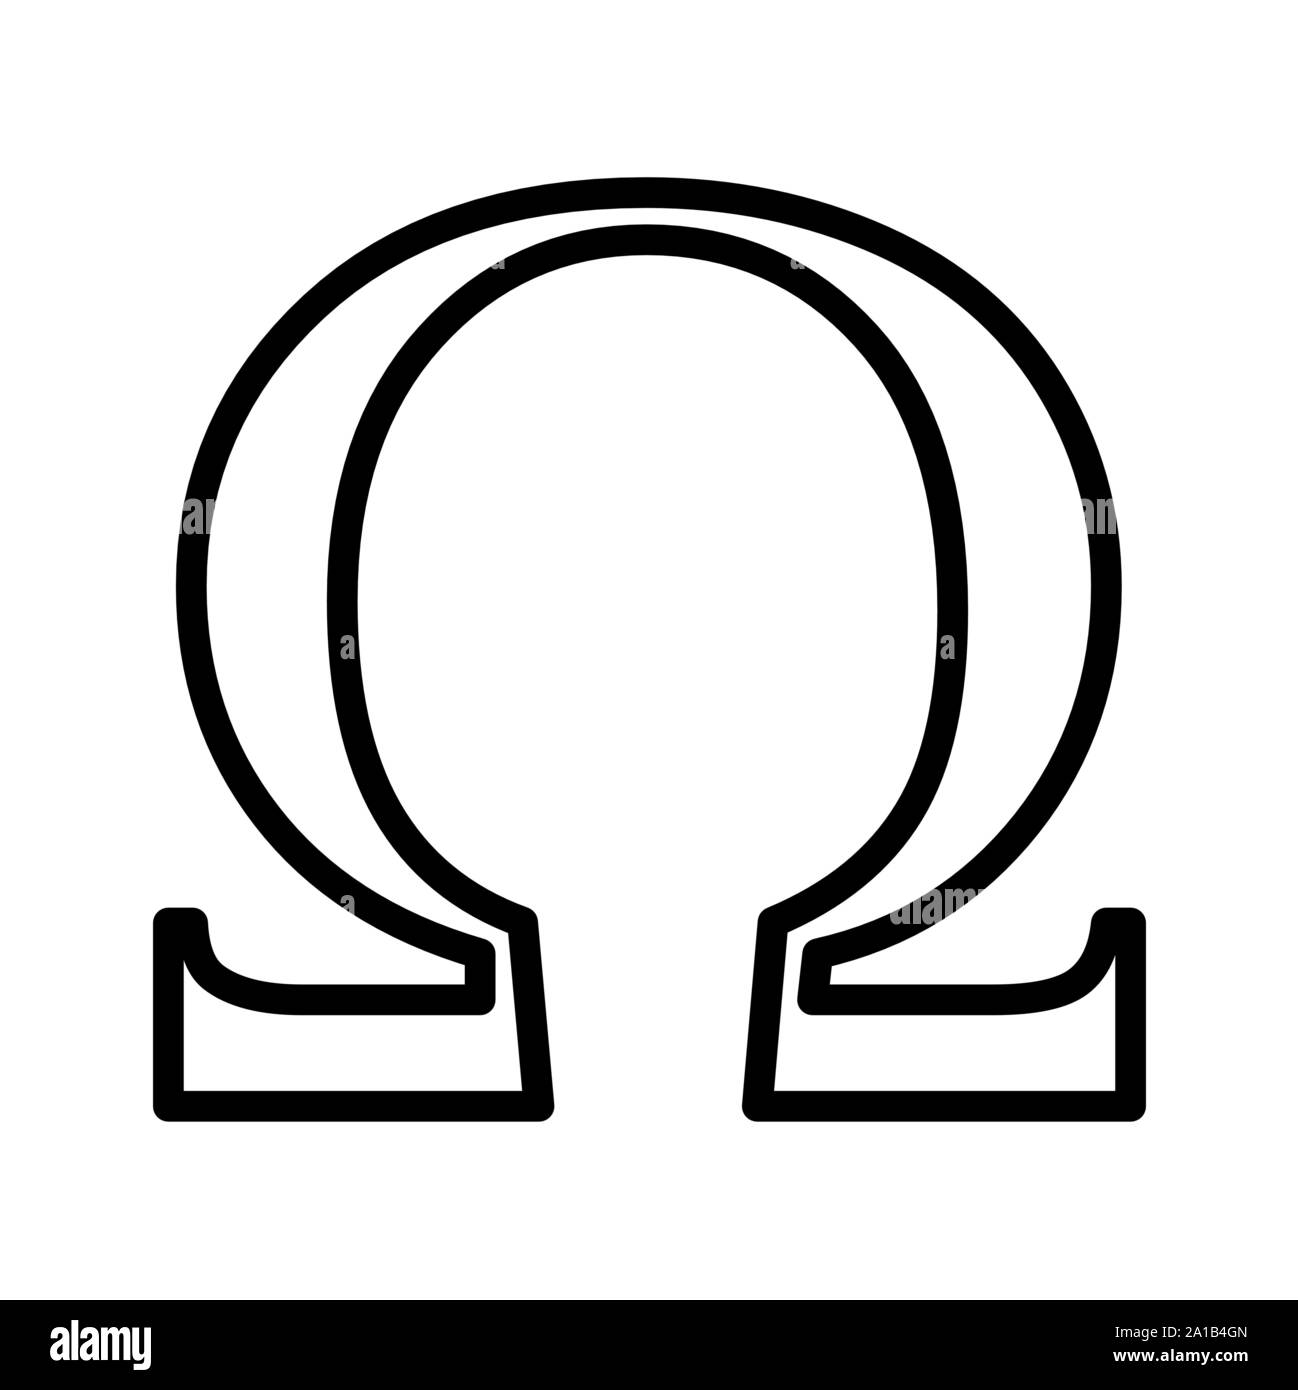 Ohm symbol Black and White Stock Photos & Images - Alamy